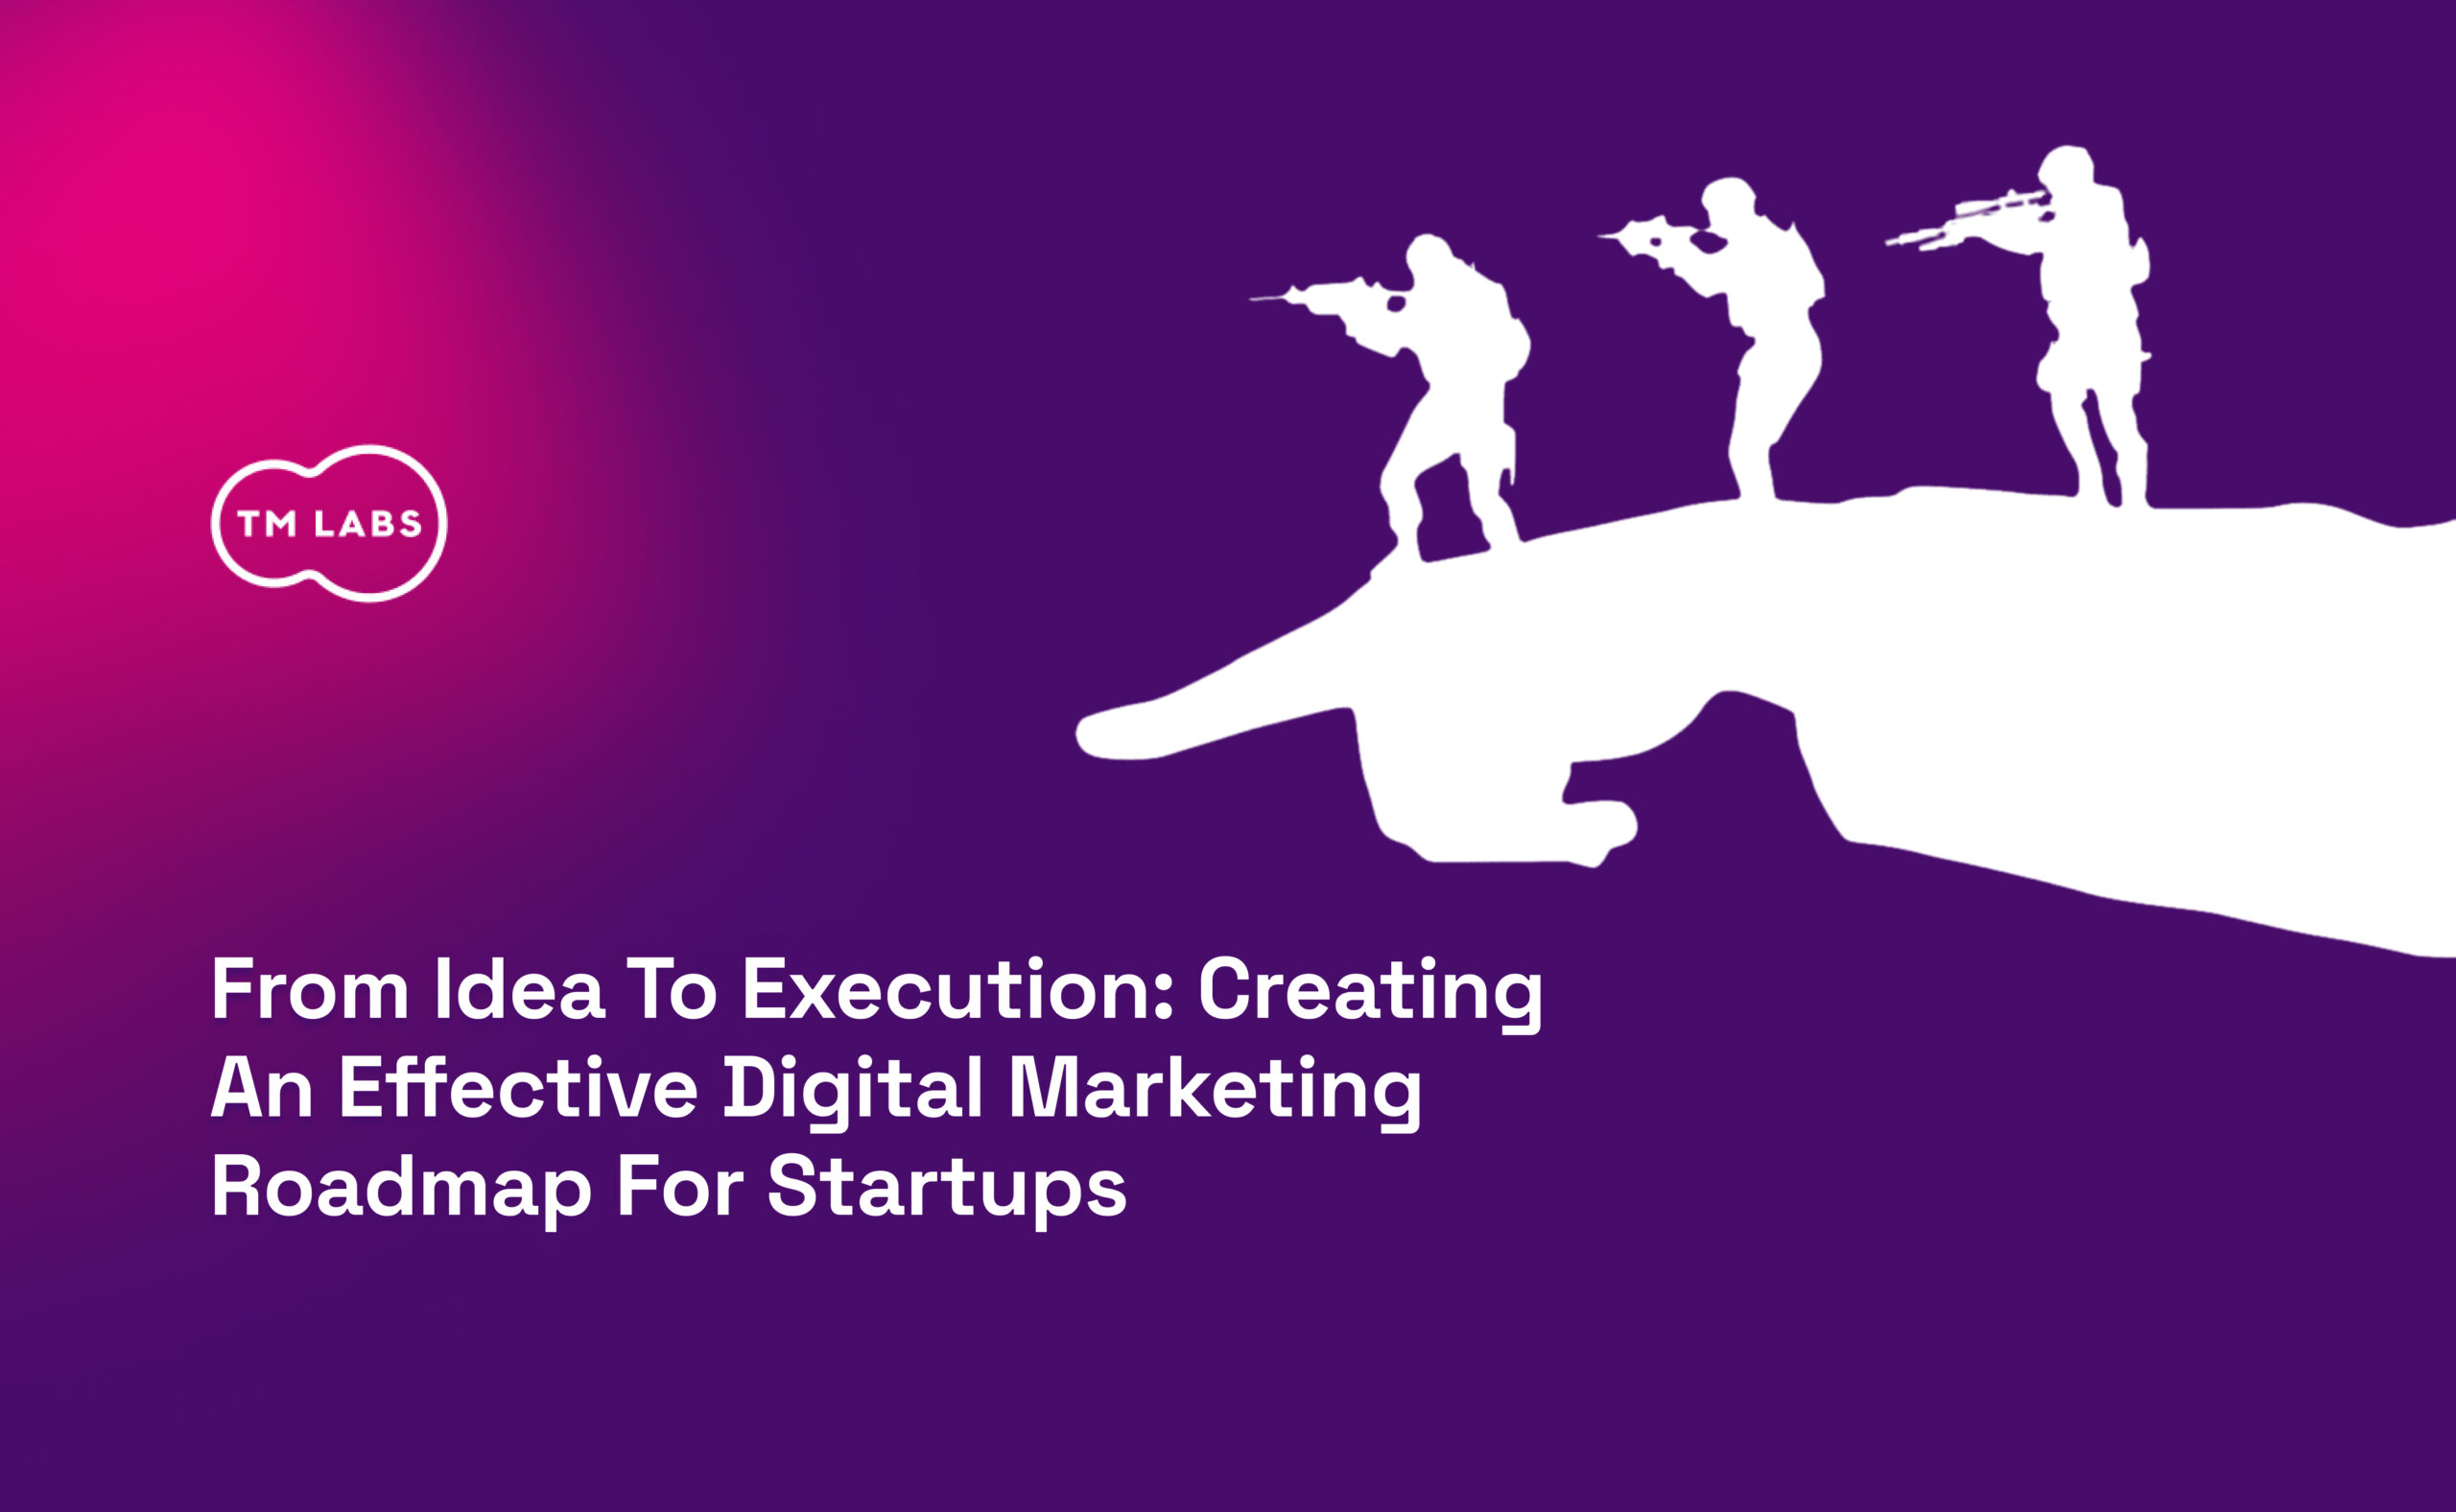 Creating an Effective Digital Marketing Roadmap for Startups